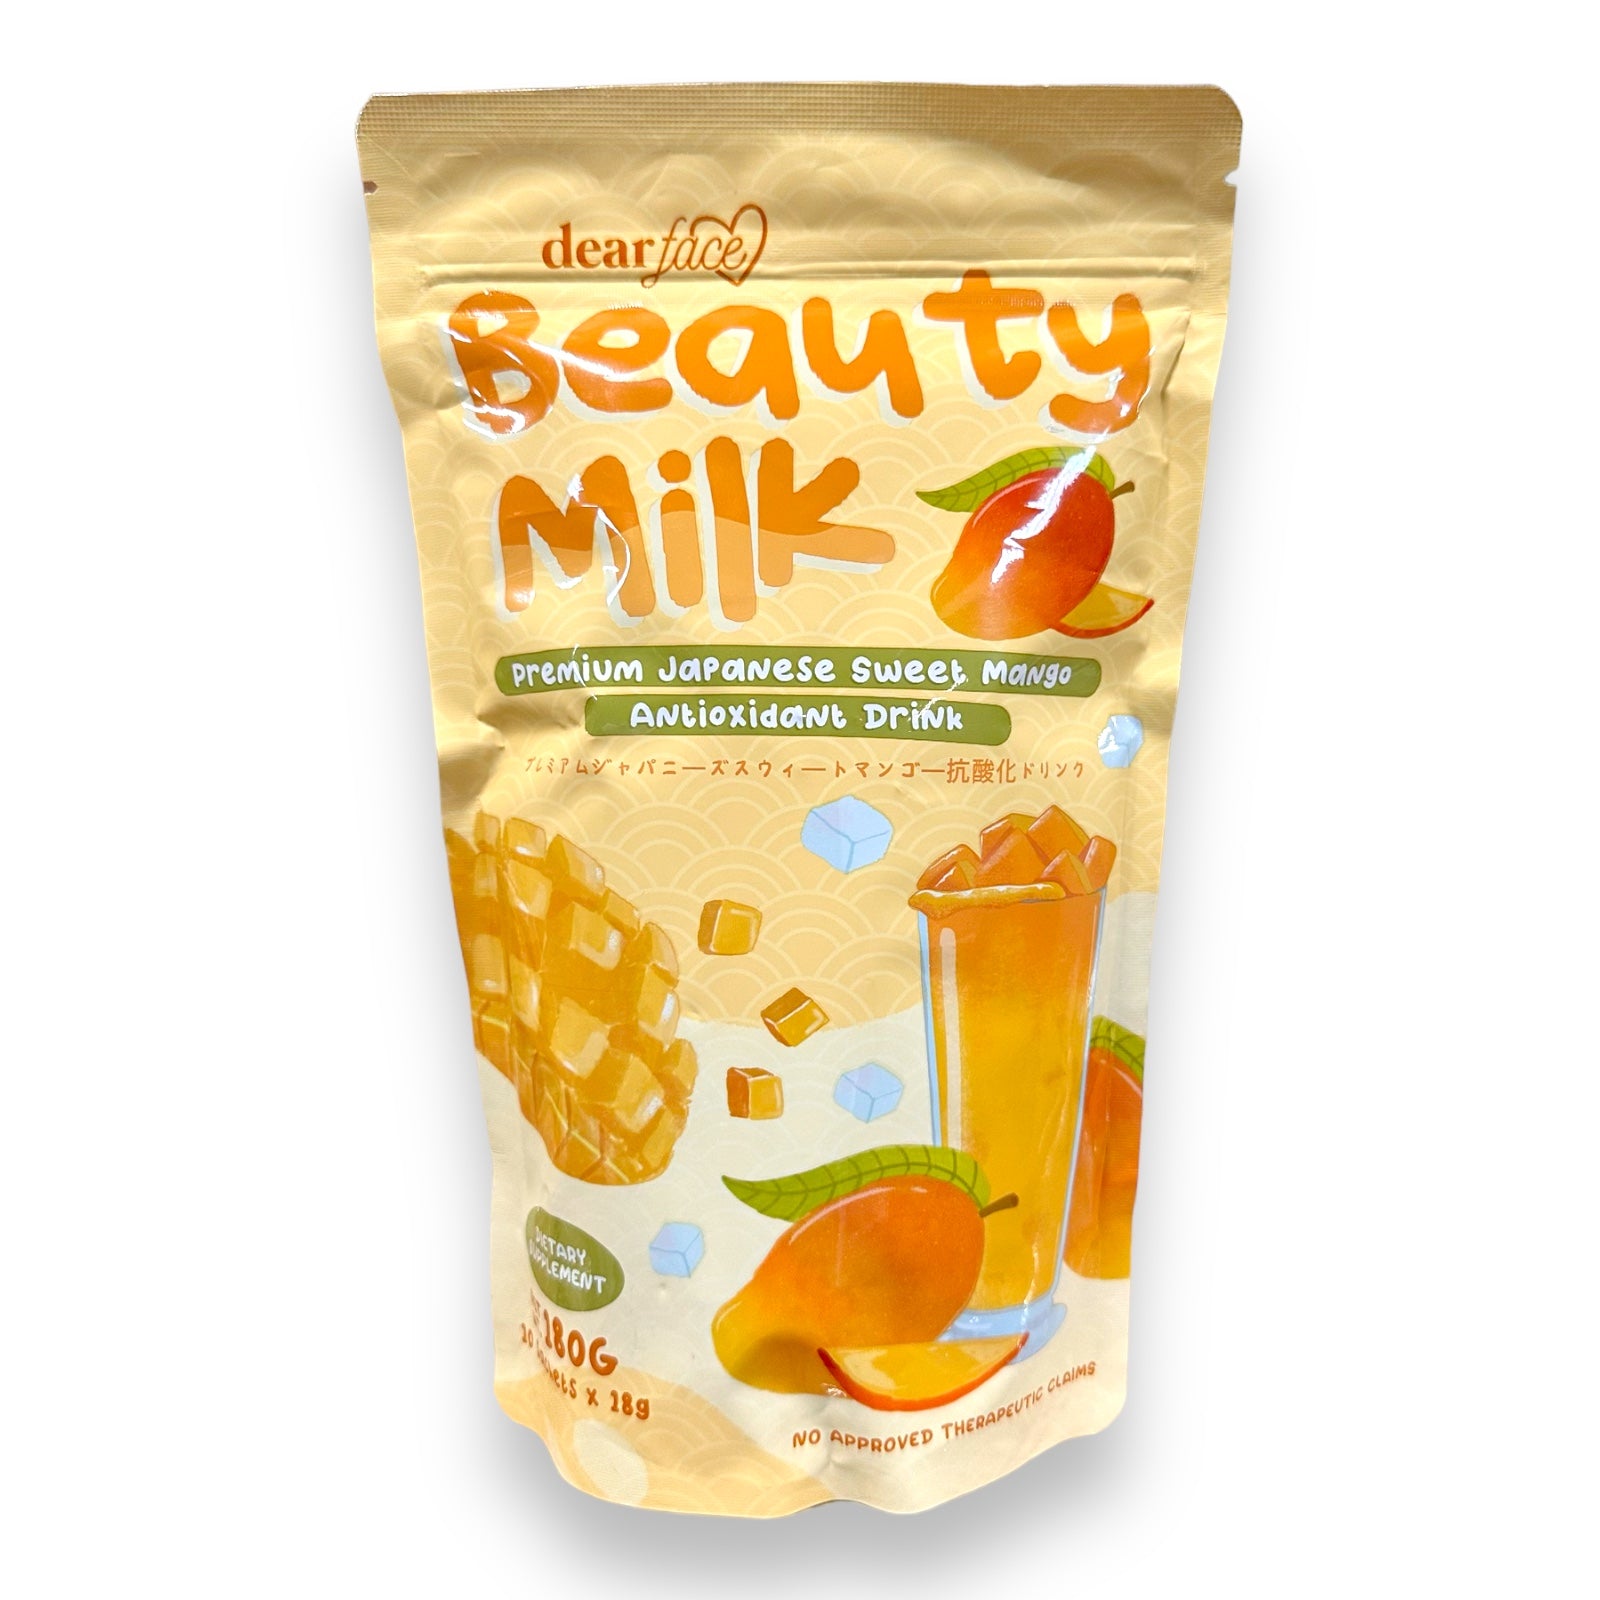 Dear Face - Beauty Milk - Premium Japanese Sweet MANGO  - Antioxidant Drink 180g Mo